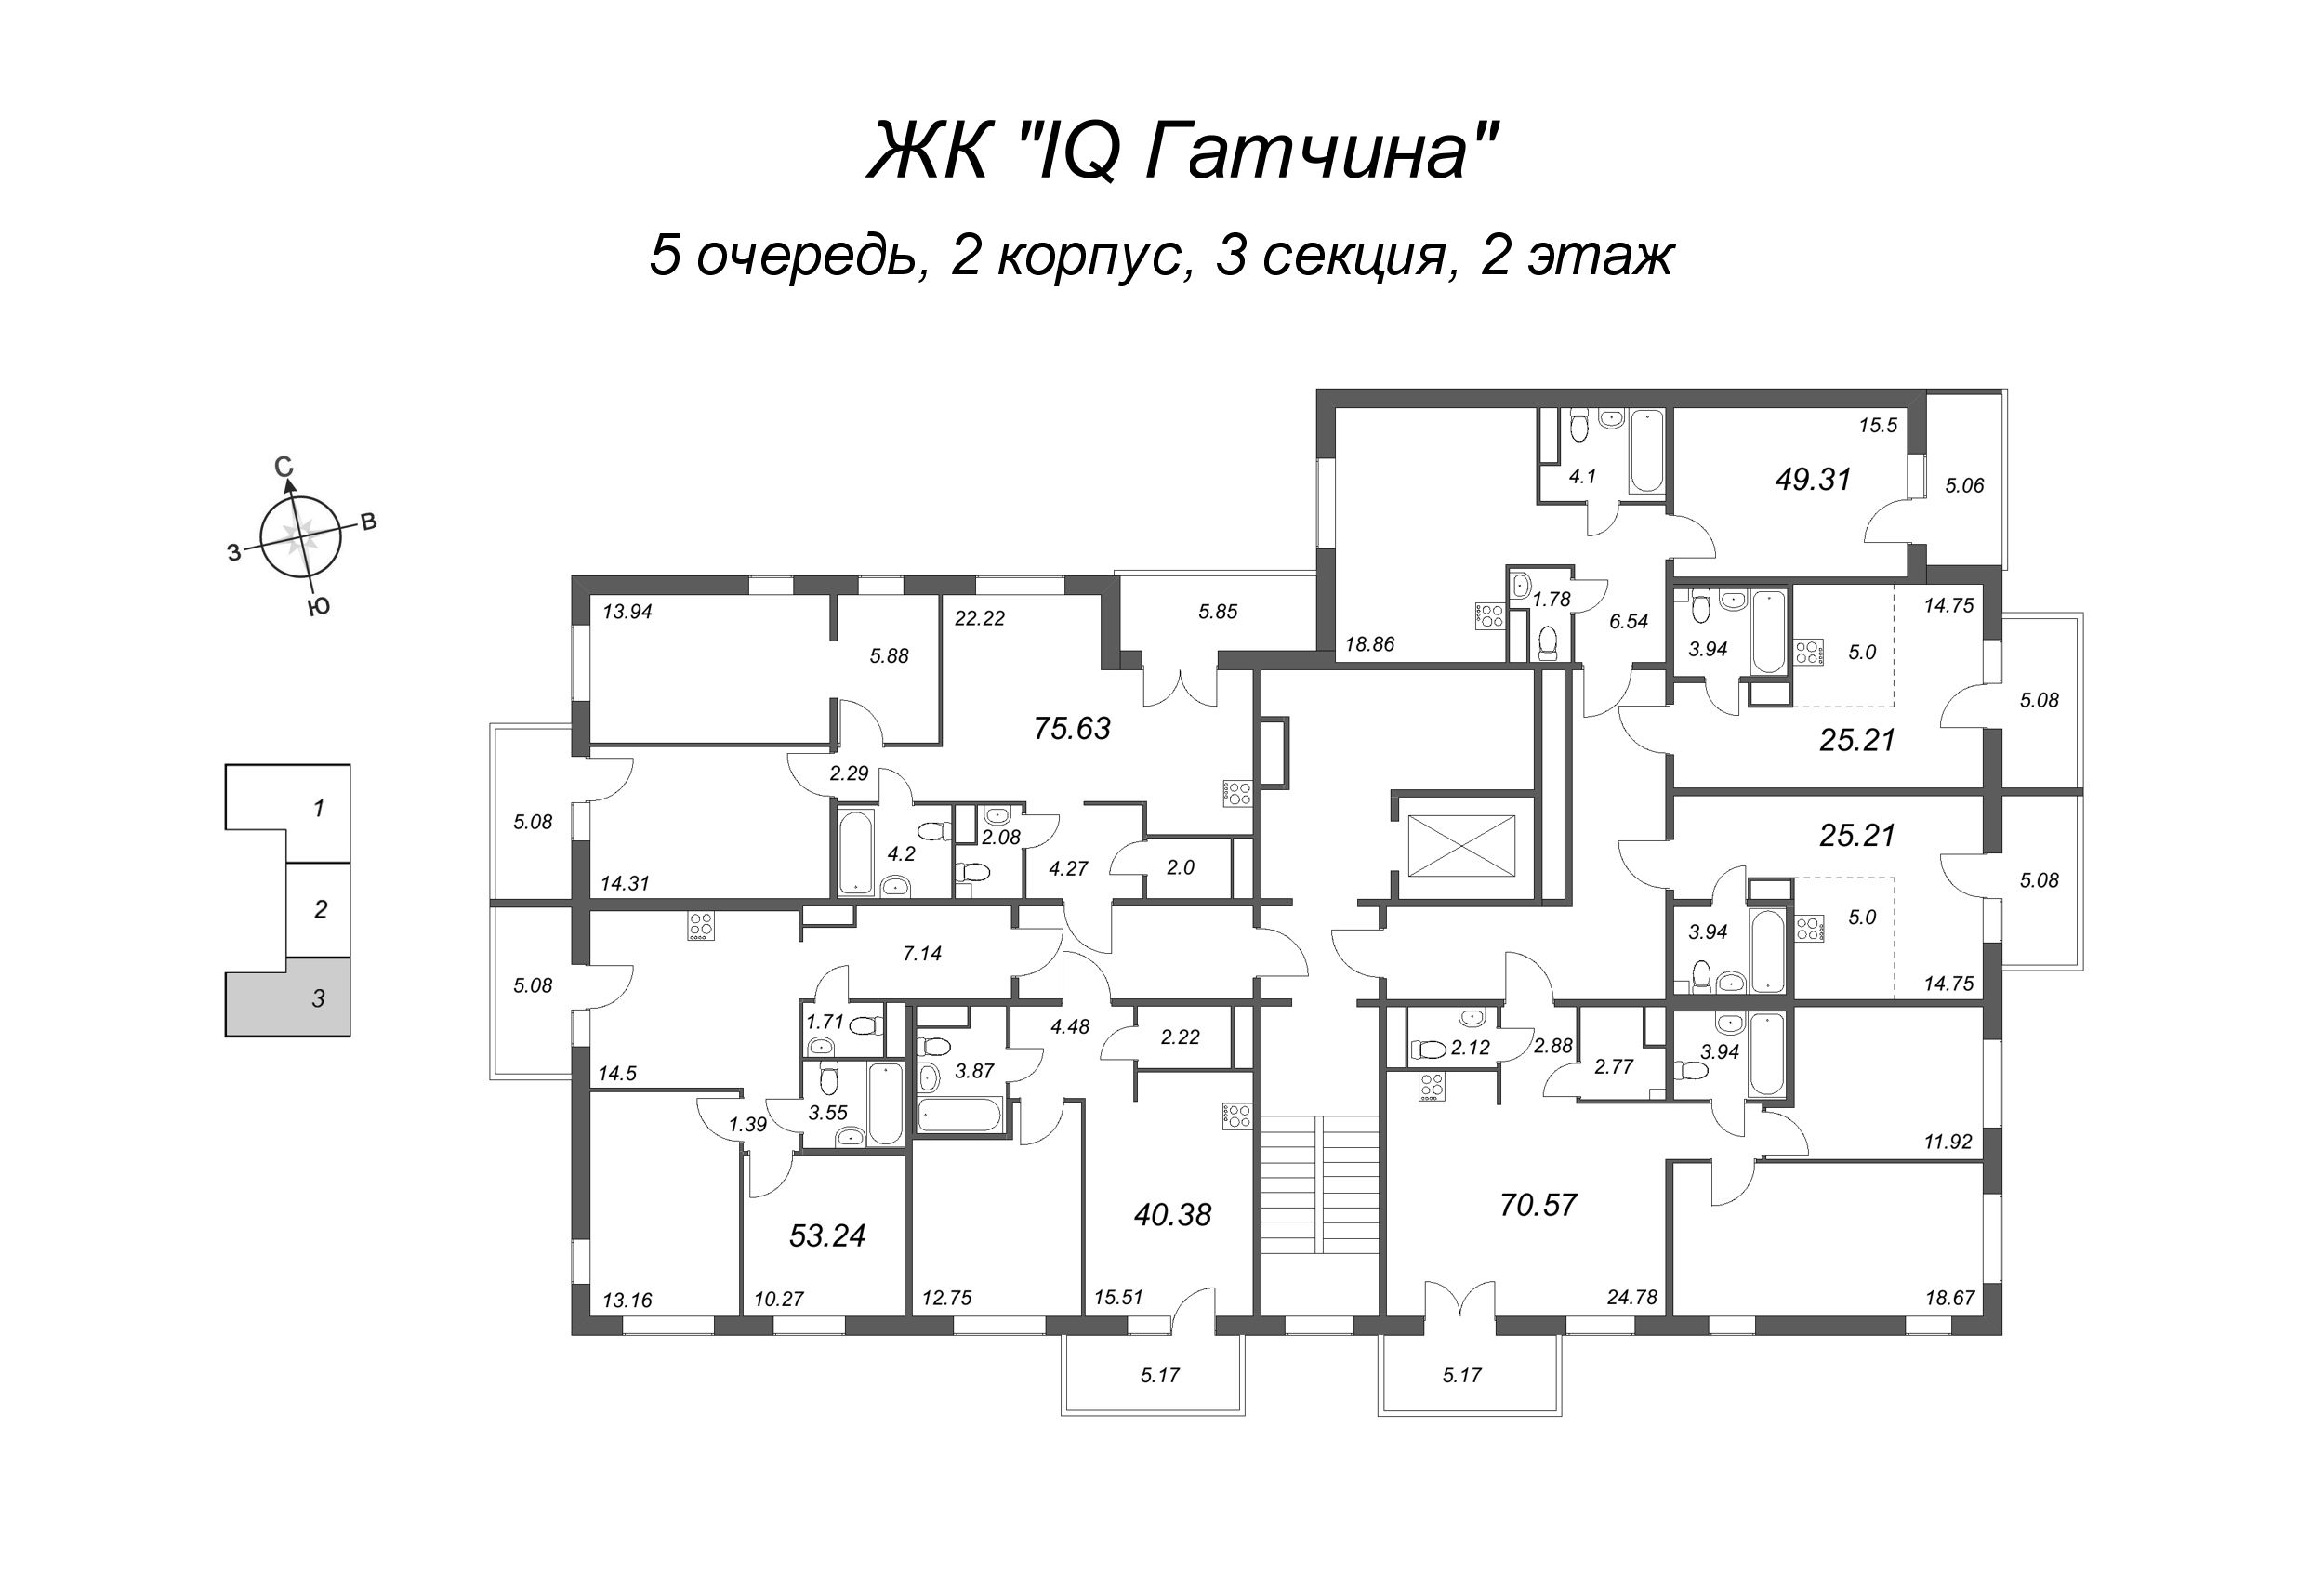 2-комнатная (Евро) квартира, 44 м² - планировка этажа